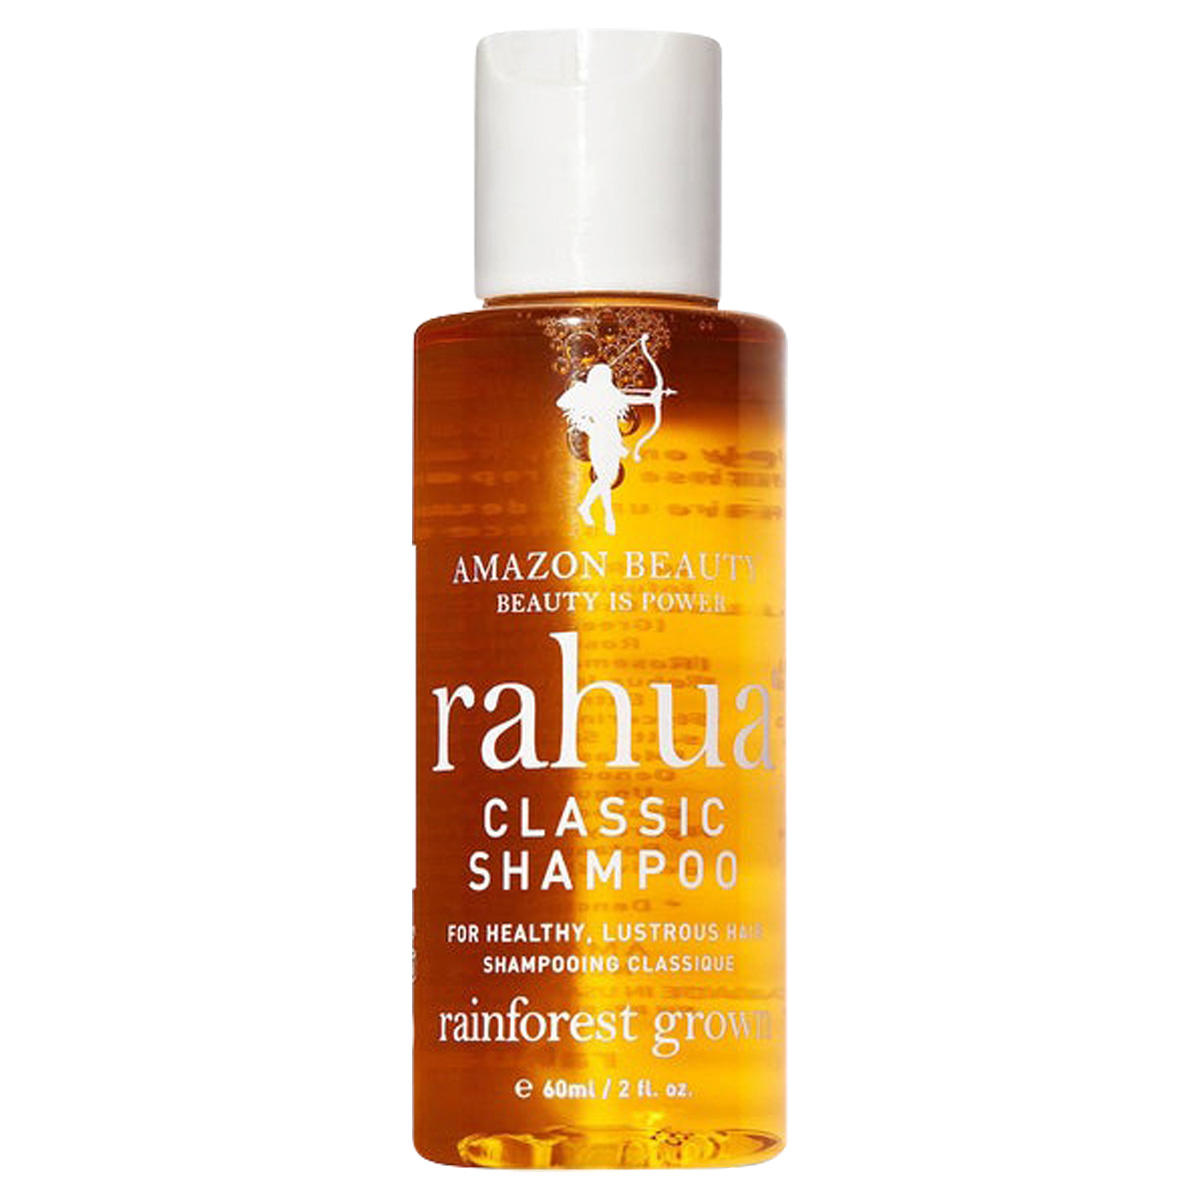 Rahua Classic Shampoo Travel Size 60 ml